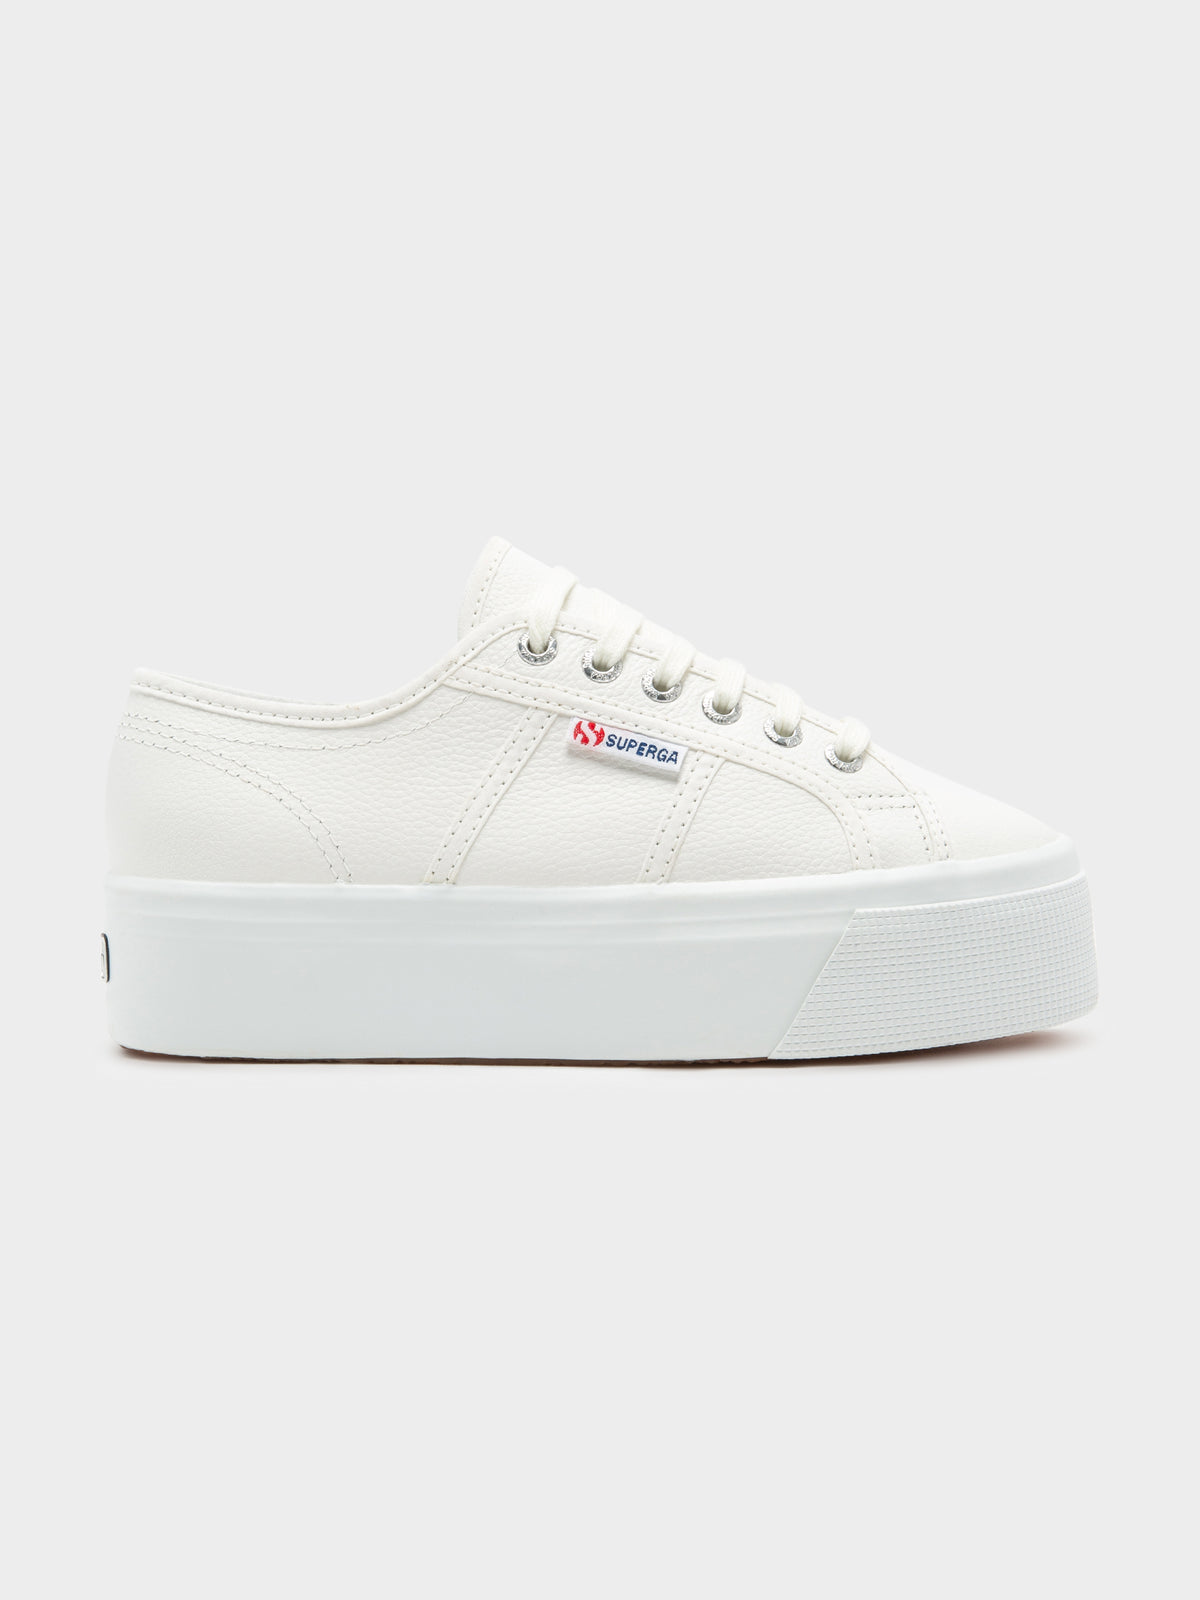 Womens 2790 Cotu Classic Platform Sneakers in White